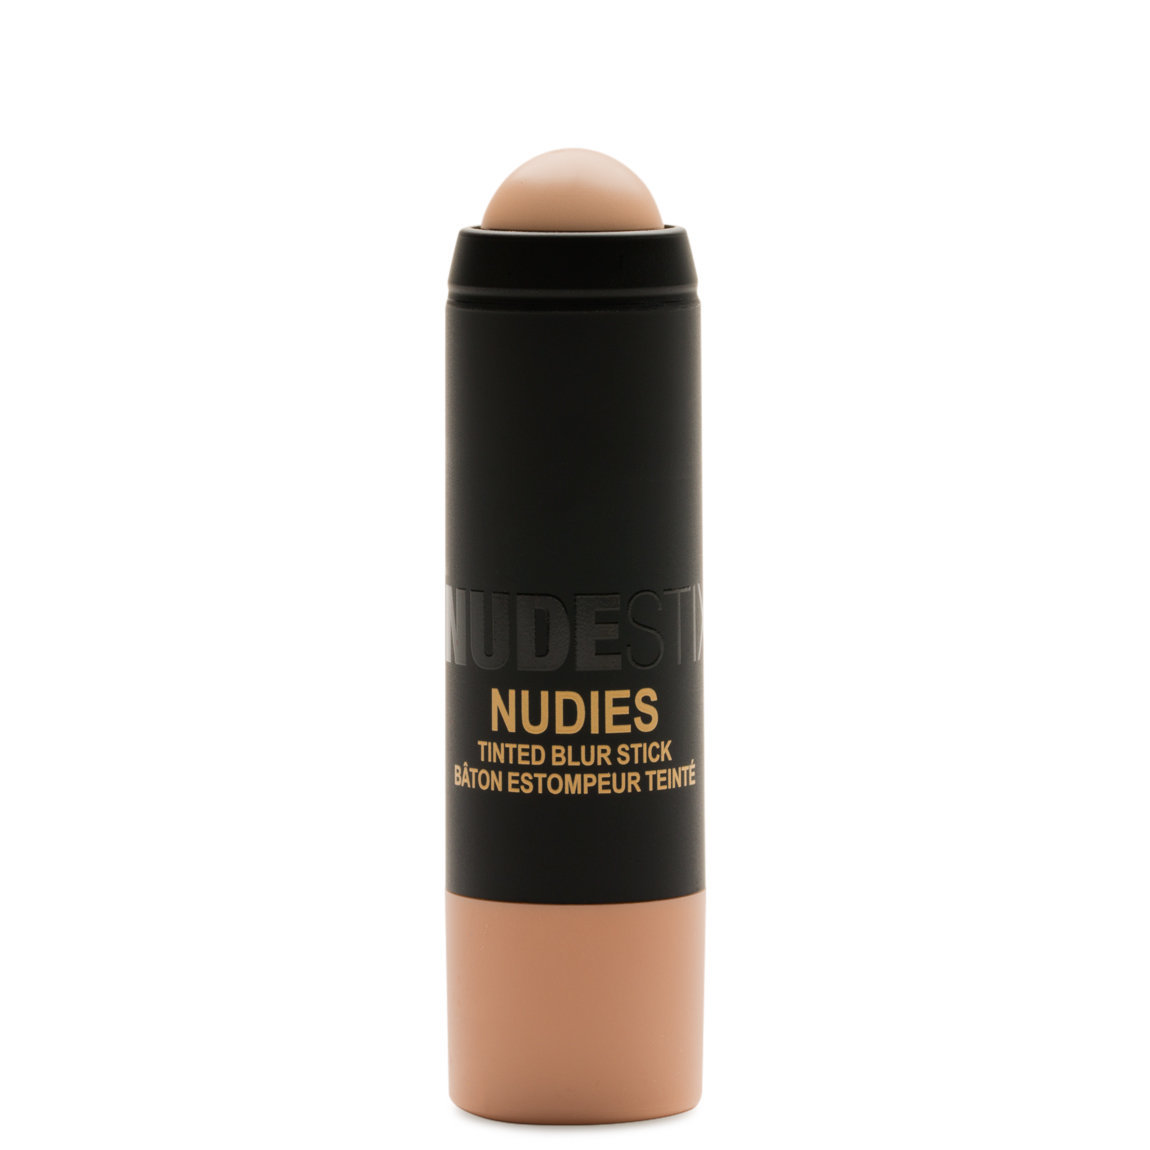 Nudestix Nudies Tinted Blur Stick Light 1 alternative view 1 - product swatch.